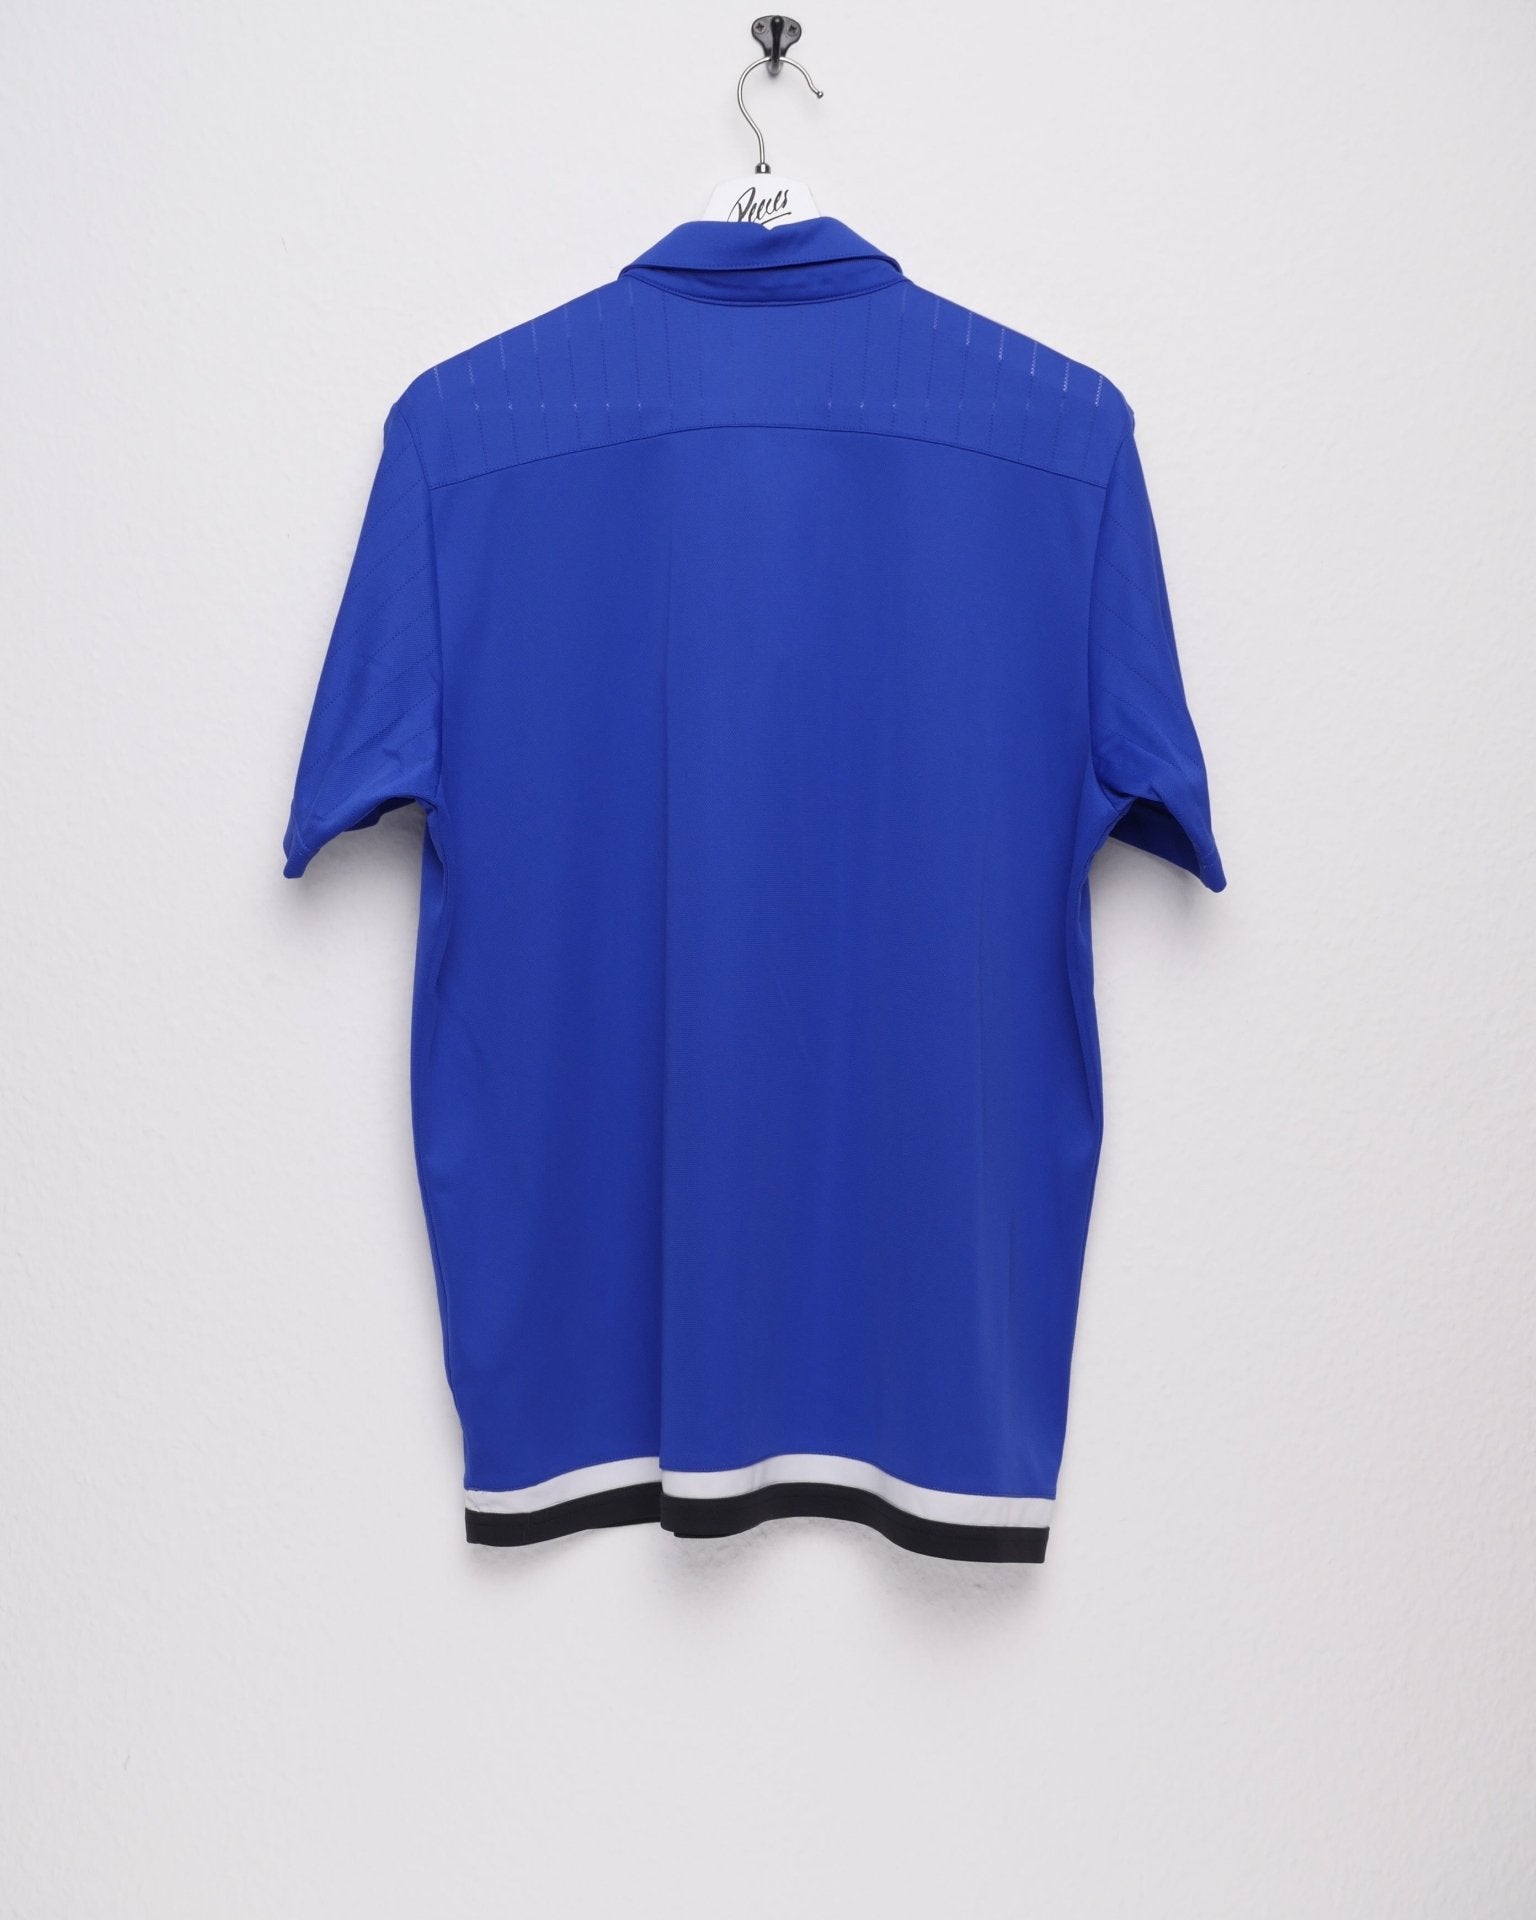 adidas embroidered Logo 'Irish Football' blue Jersey Shirt - Peeces